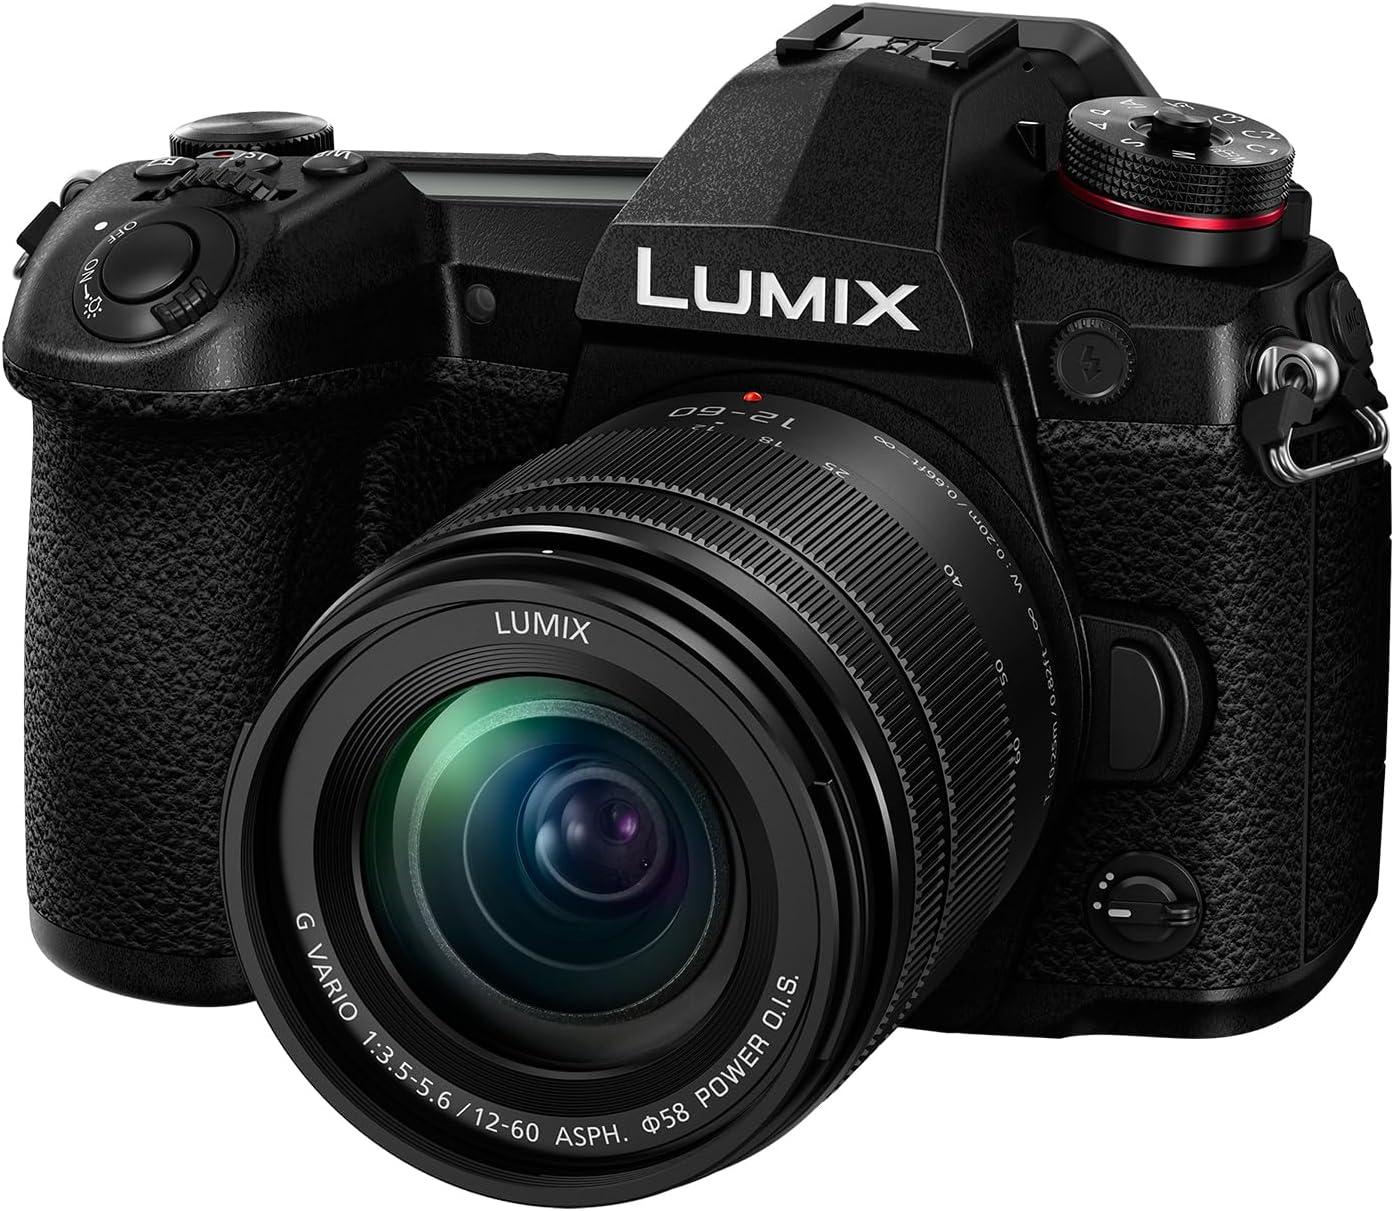 Panasonic Lumix G9 Mirrorless Camera with Lumix Lens for $649.99 Shipped